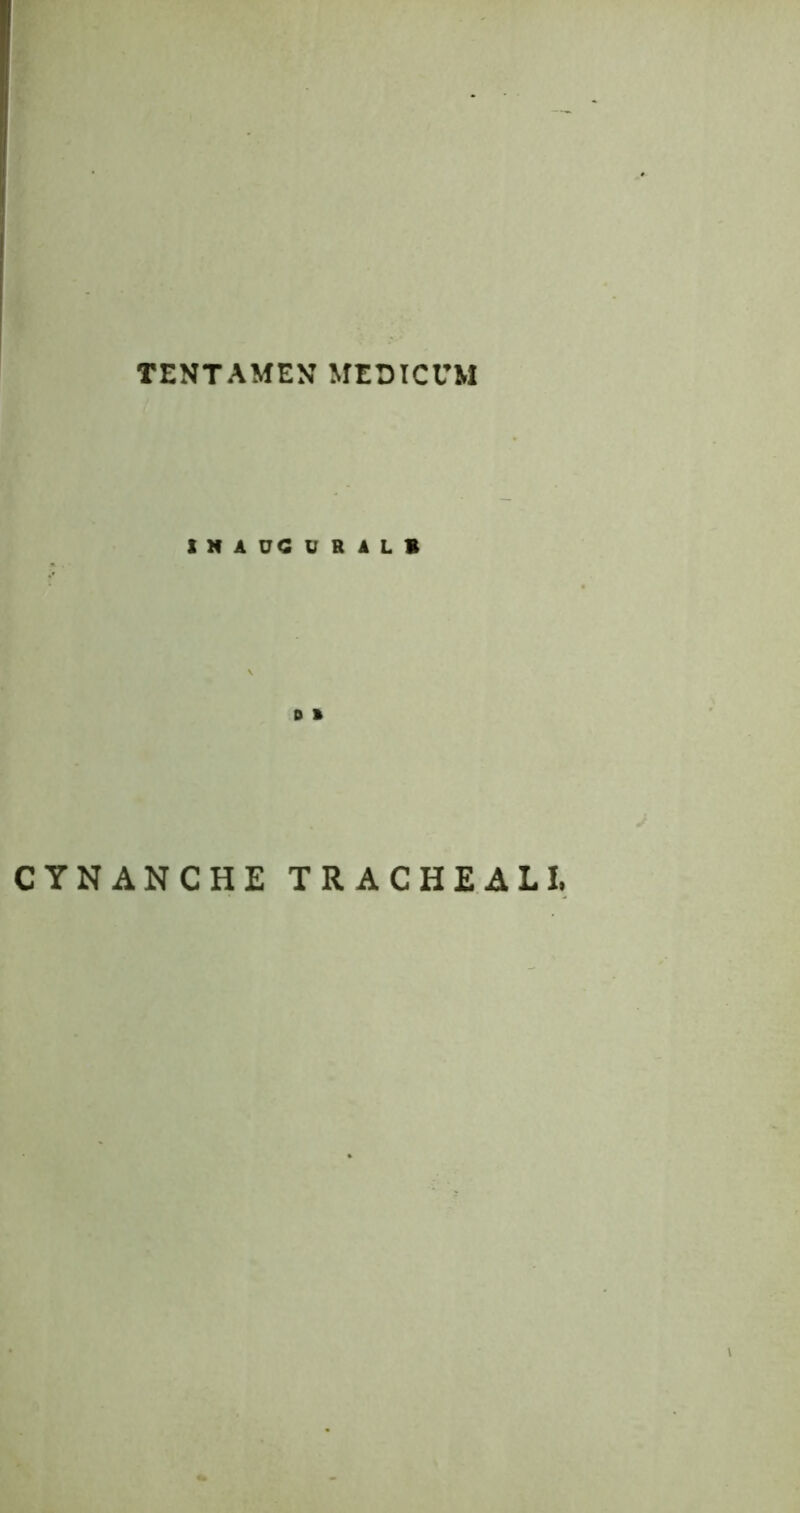 TENTAMEN MEDICUM INAUGURALB D » CYNANCHE TRACHEALI